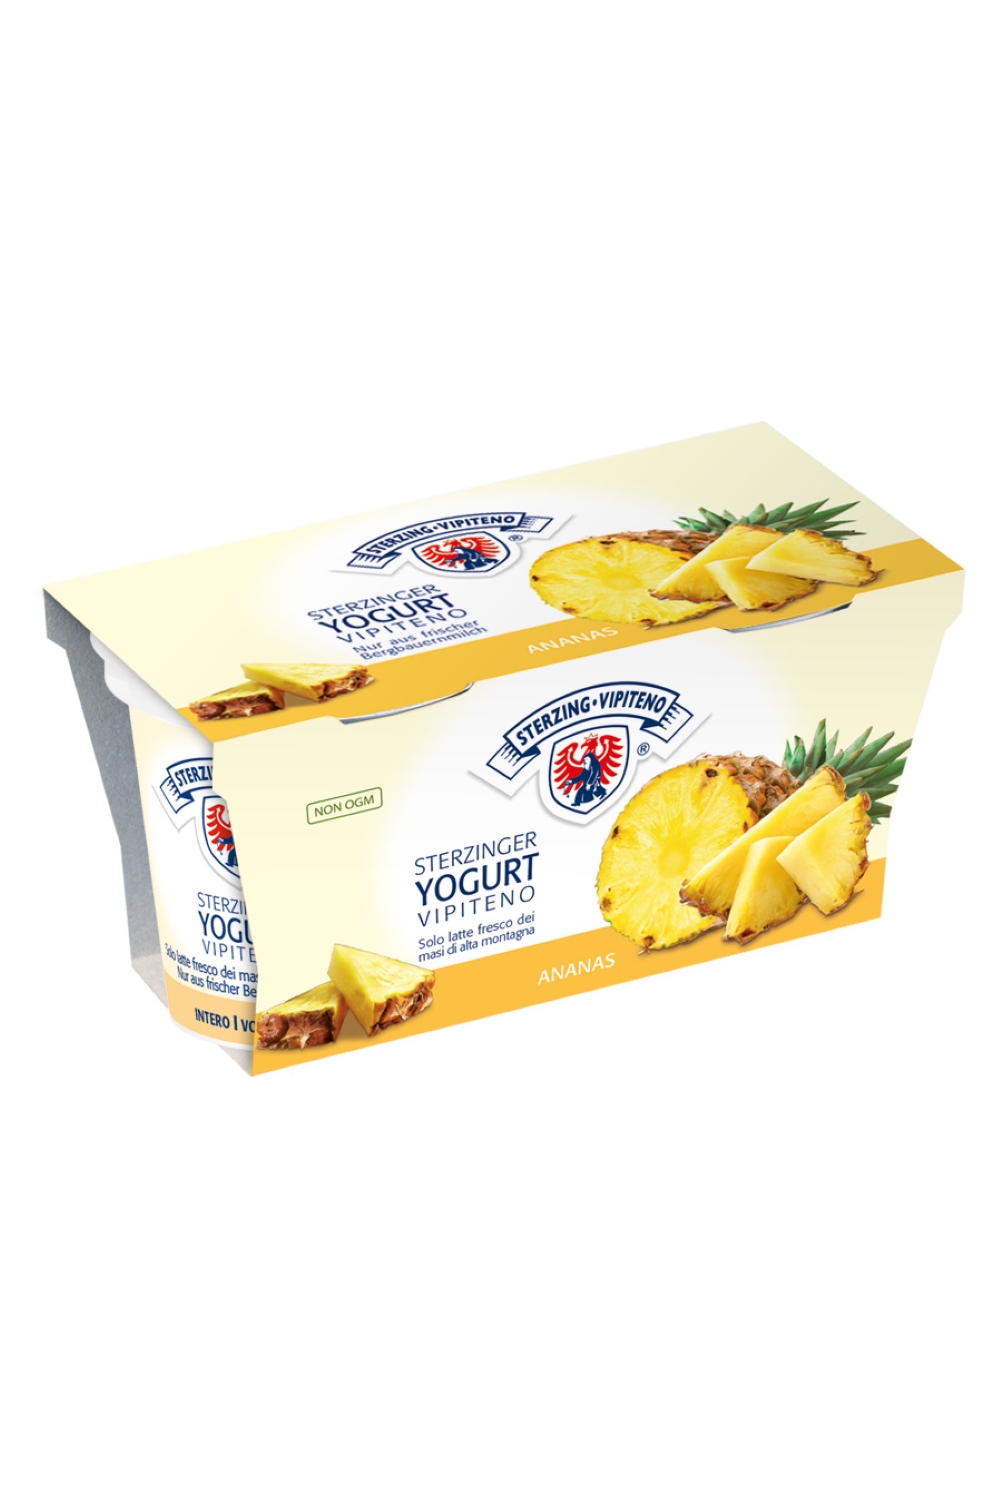 Joghurt Ananas (20 x 125g) Milchhof Sterzing | Karadarshop.com